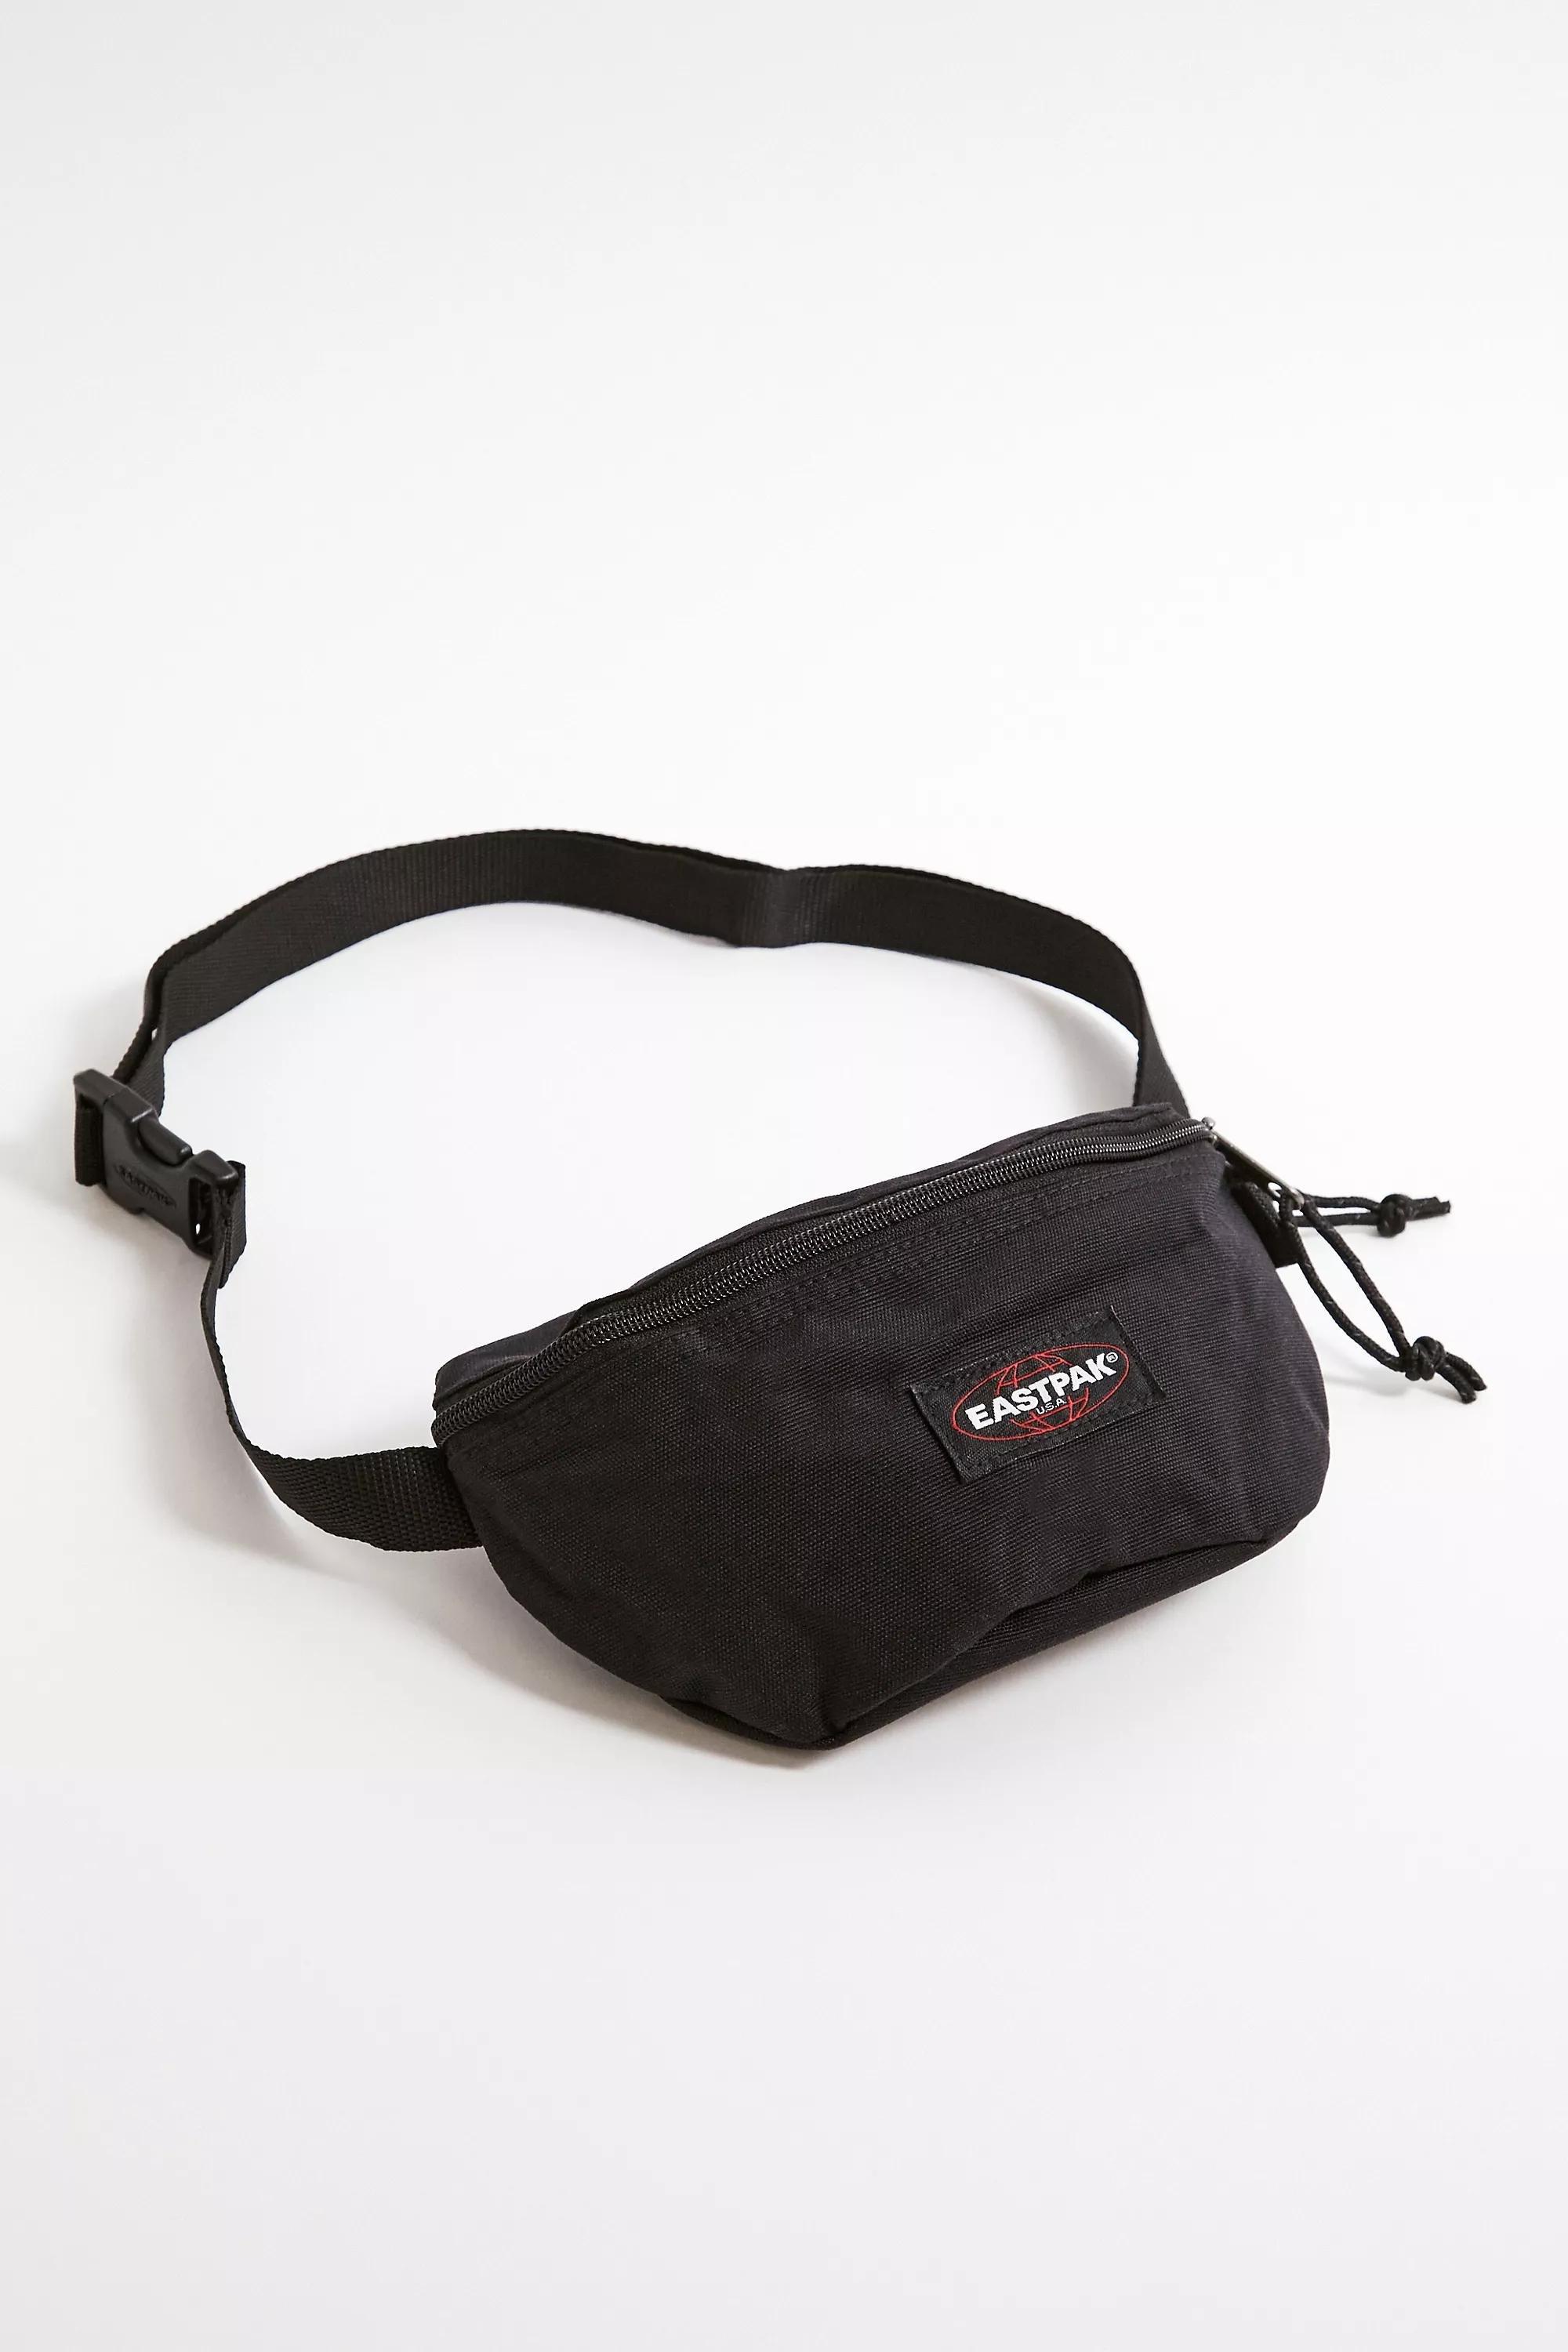 Urban Outfitters - Black Eastpak Black Springer Crossbody Bag